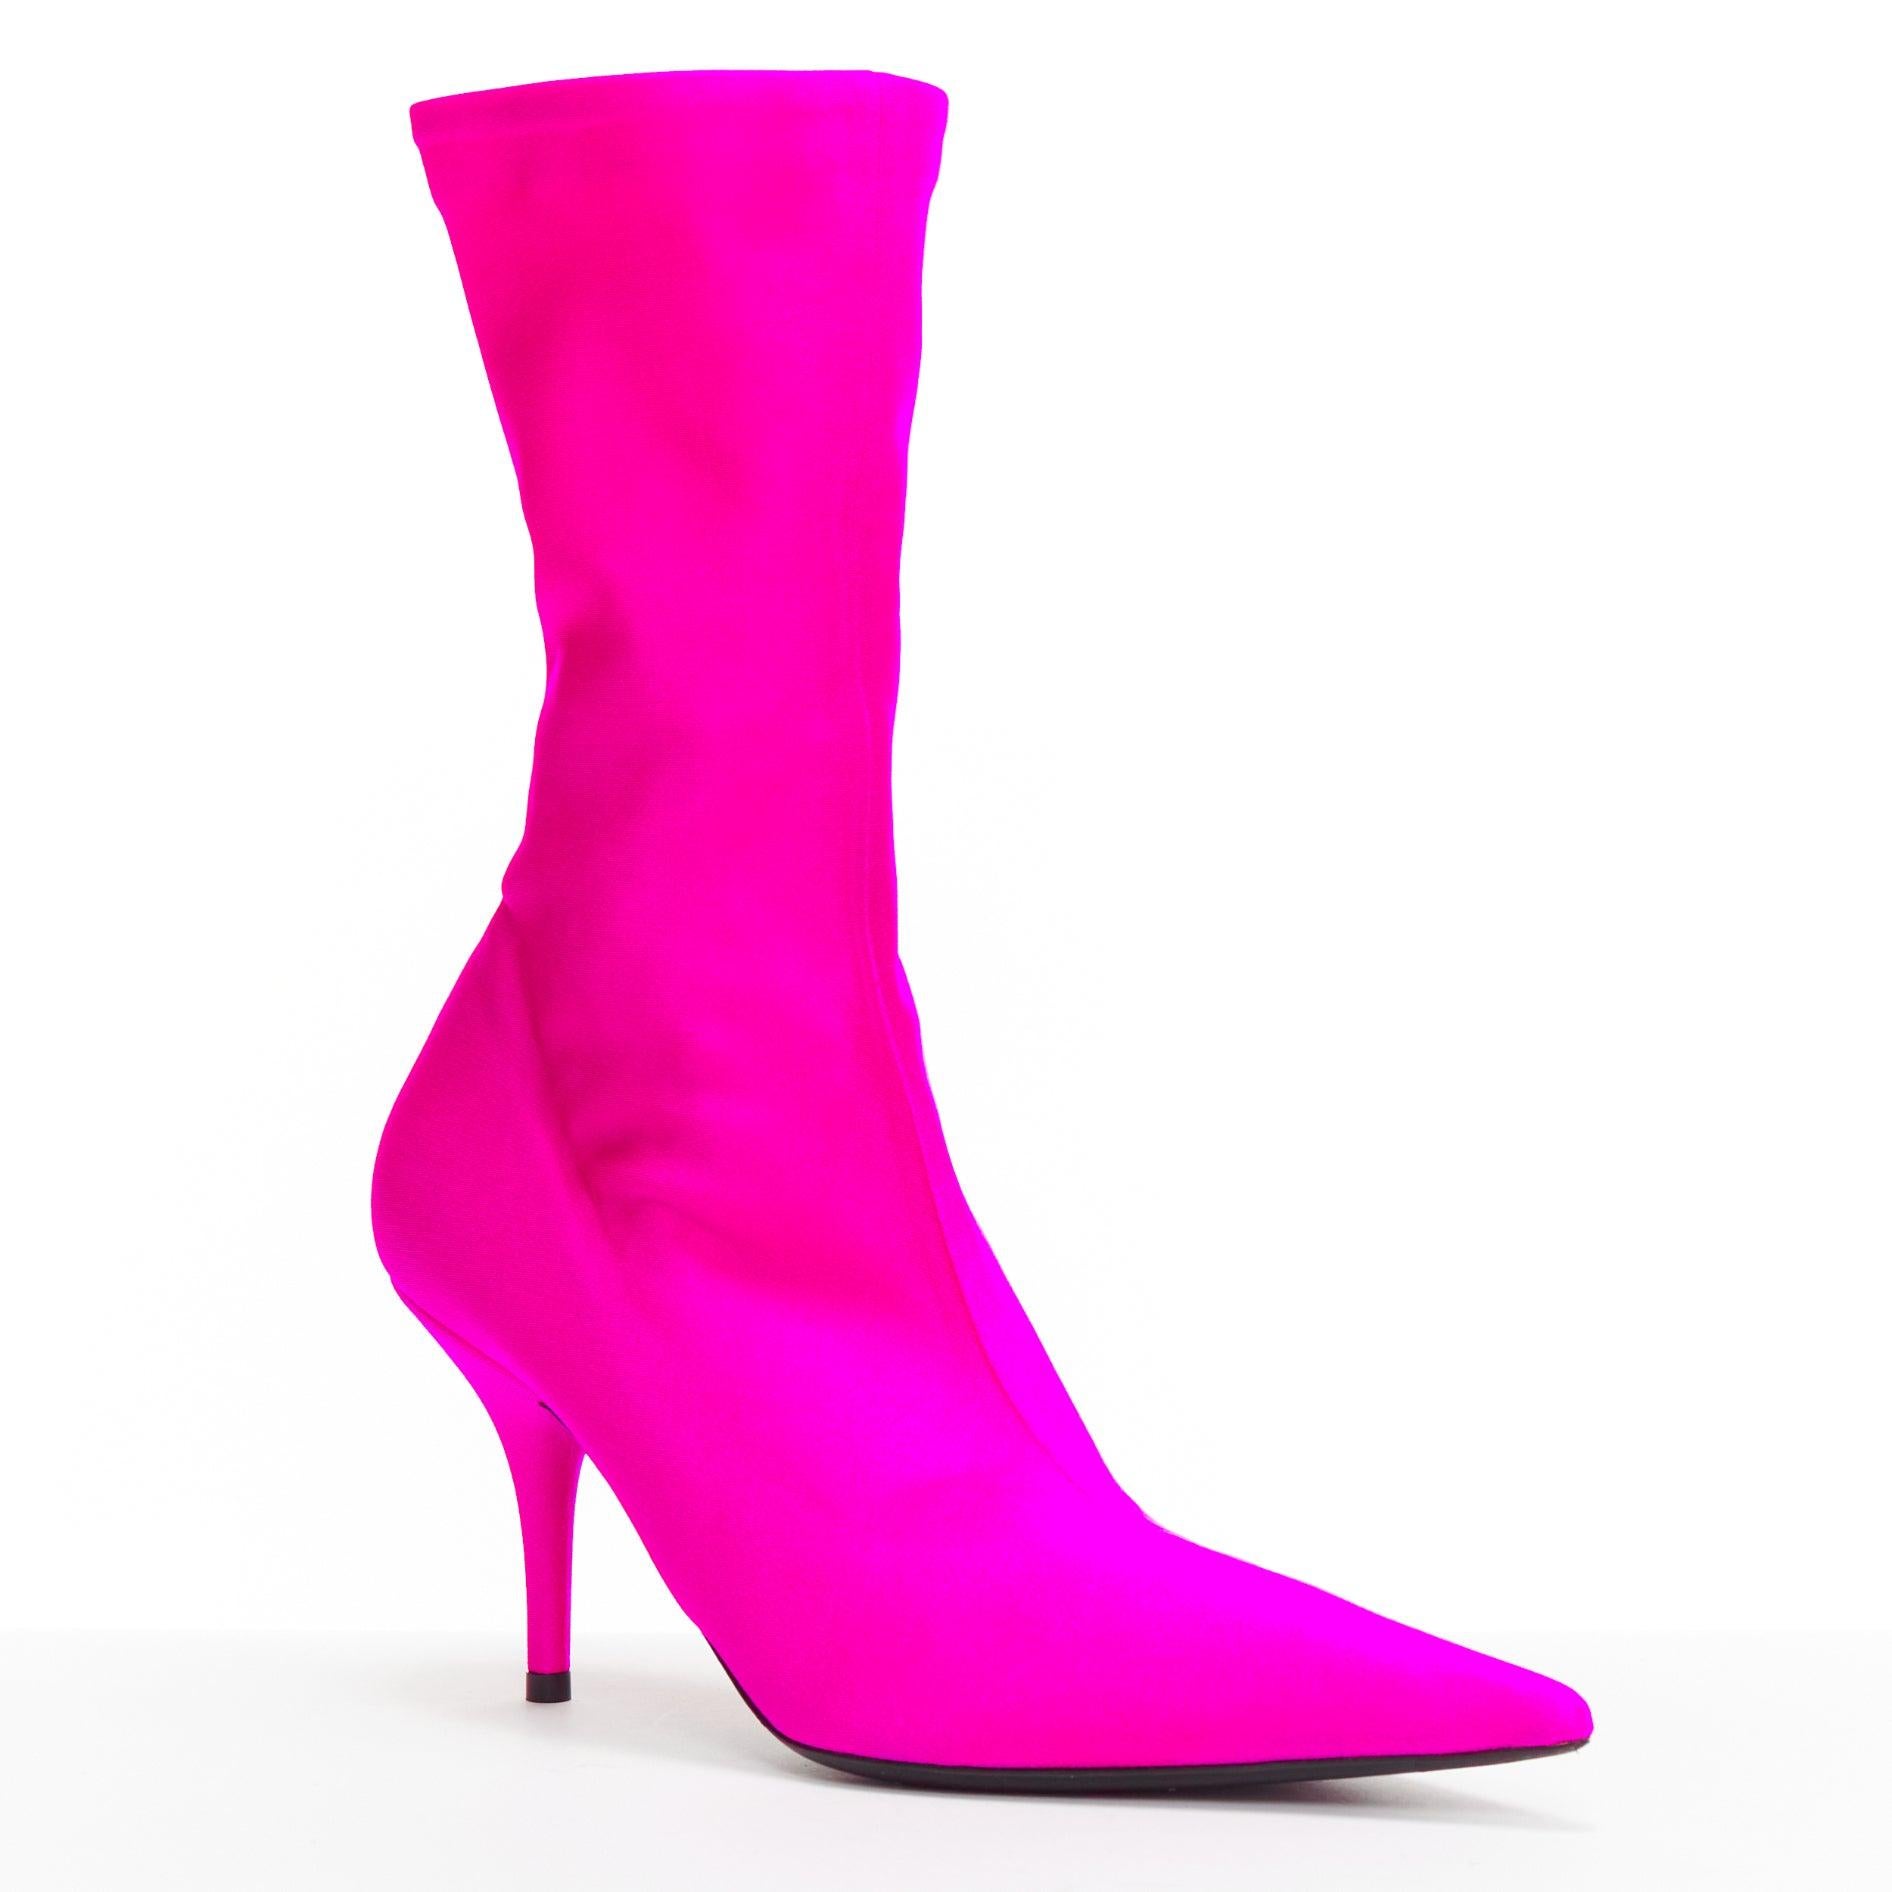 BALENCIAGA Knife neon pink lycra pointed sock boots EU38 Kim Kardashian
Reference: BSHW/A00182
Brand: Balenciaga
Designer: Demna
Model: Knife
As seen on: Kim Kardashian
Material: Fabric
Color: Pink
Pattern: Solid
Closure: Elasticated
Lining: Pink